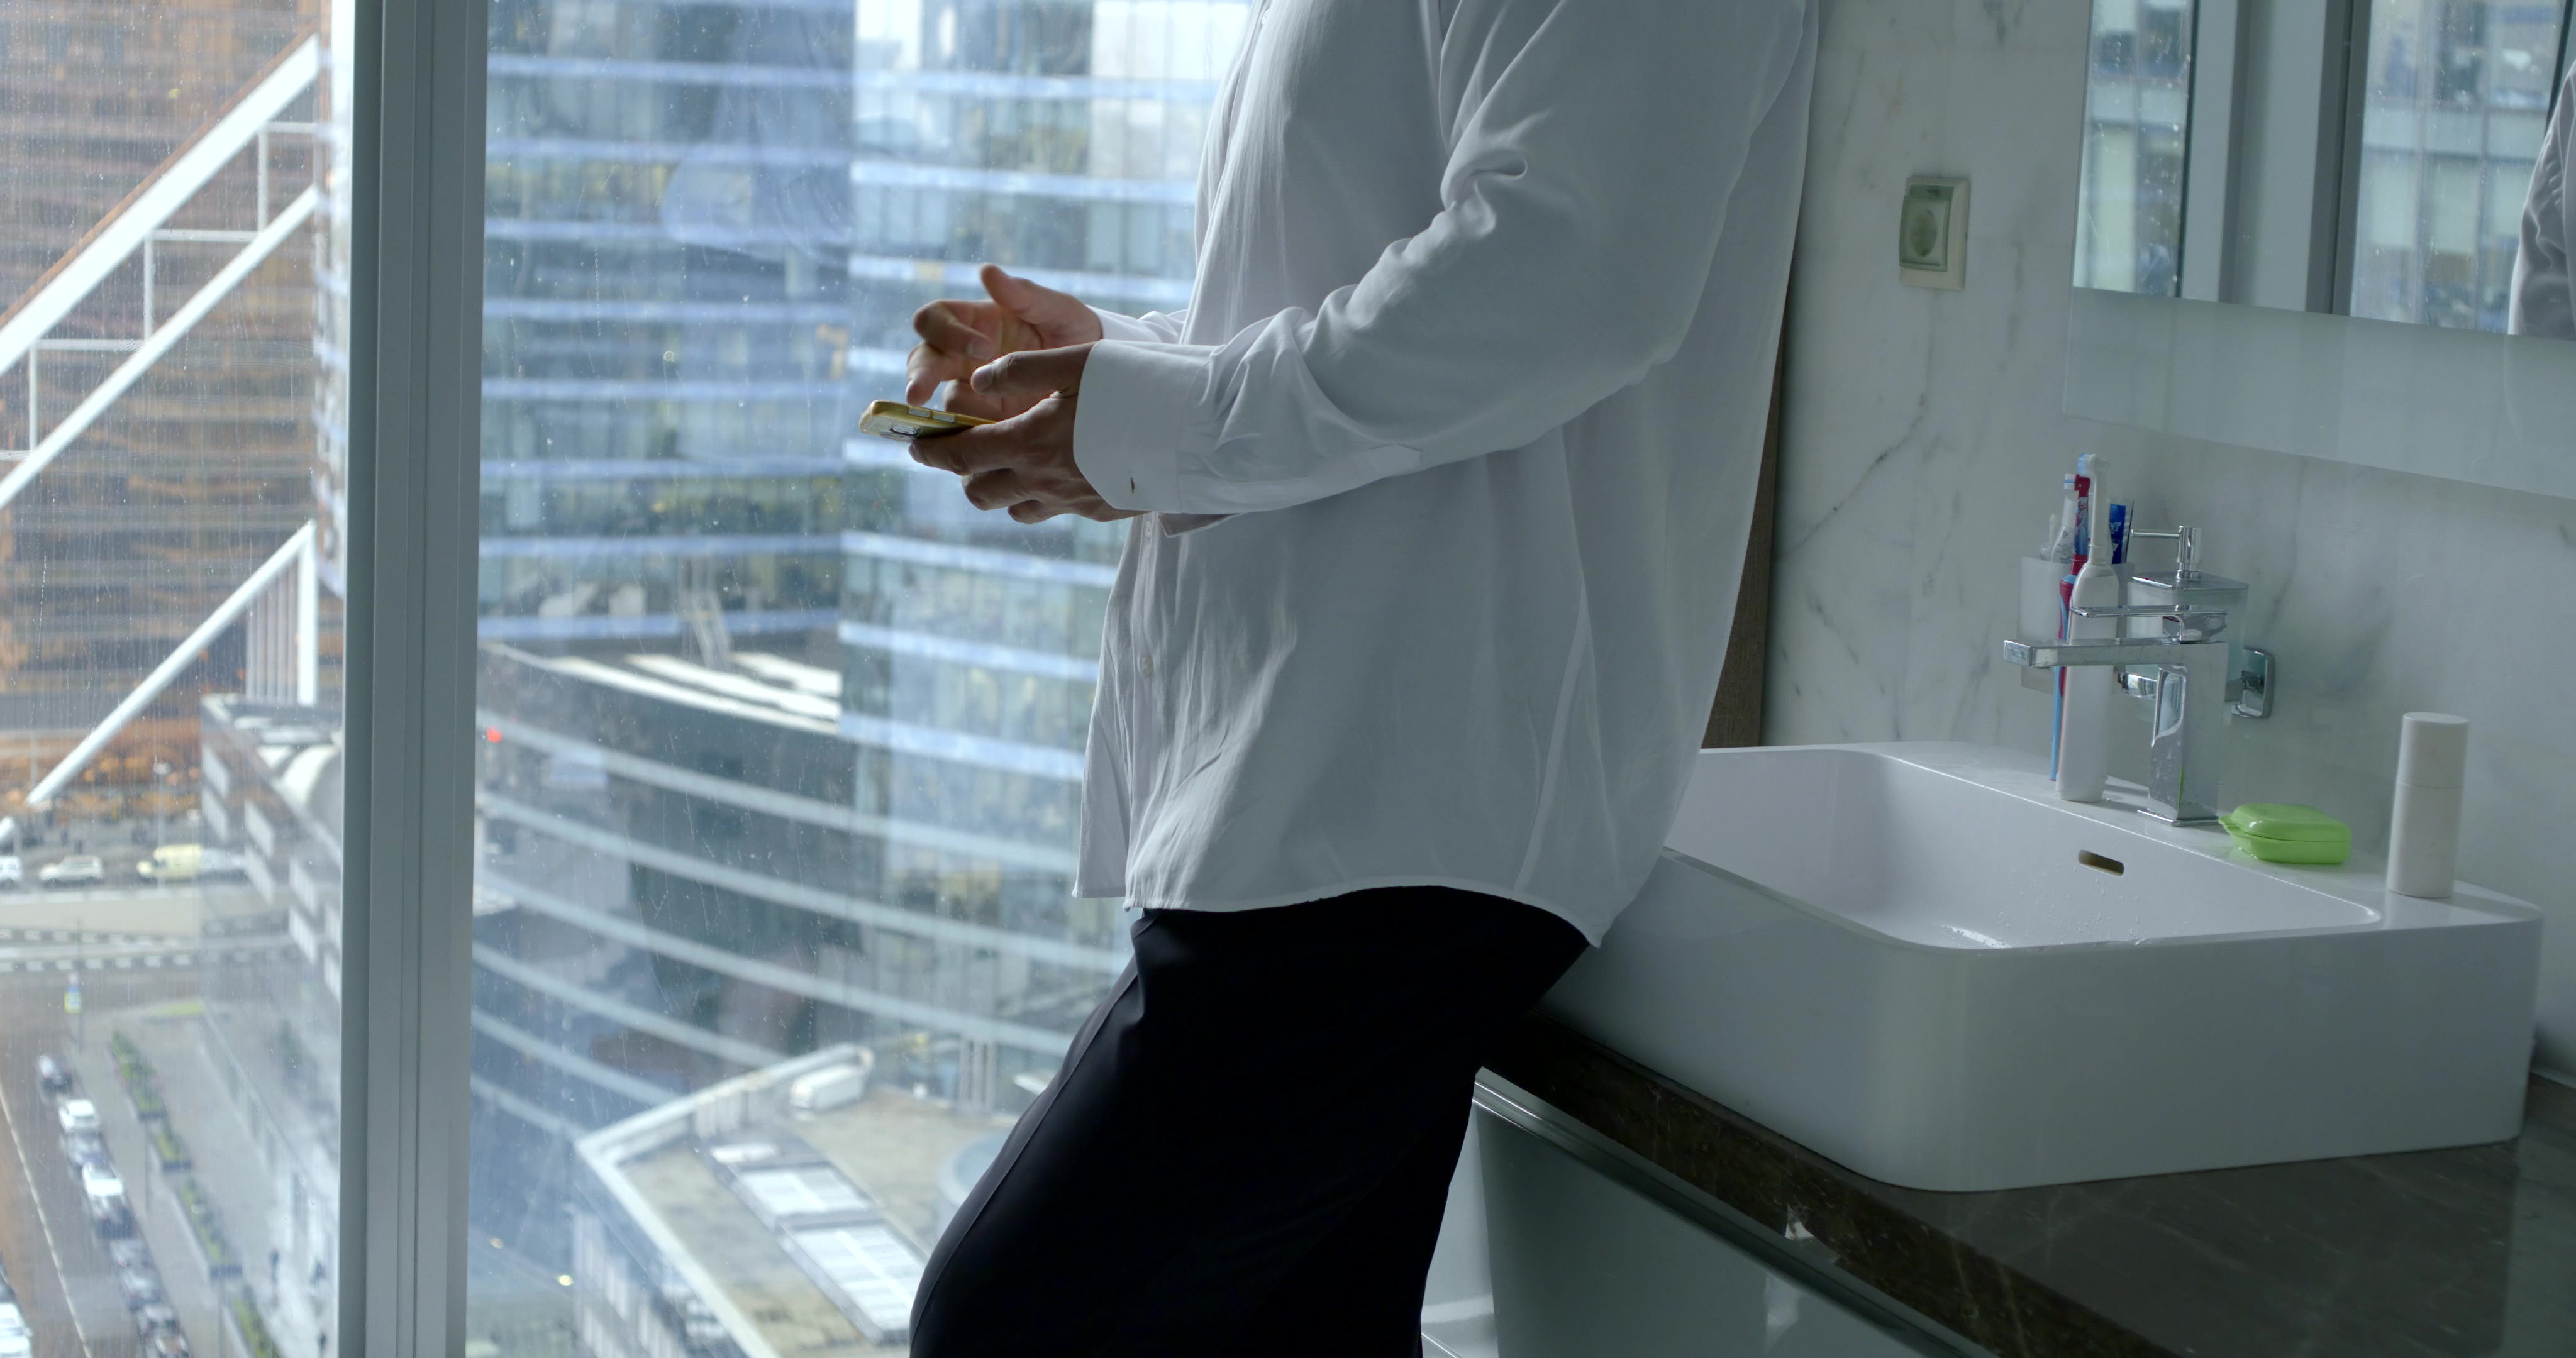 Man with smartphone in toilet. | Source: Shutterstock